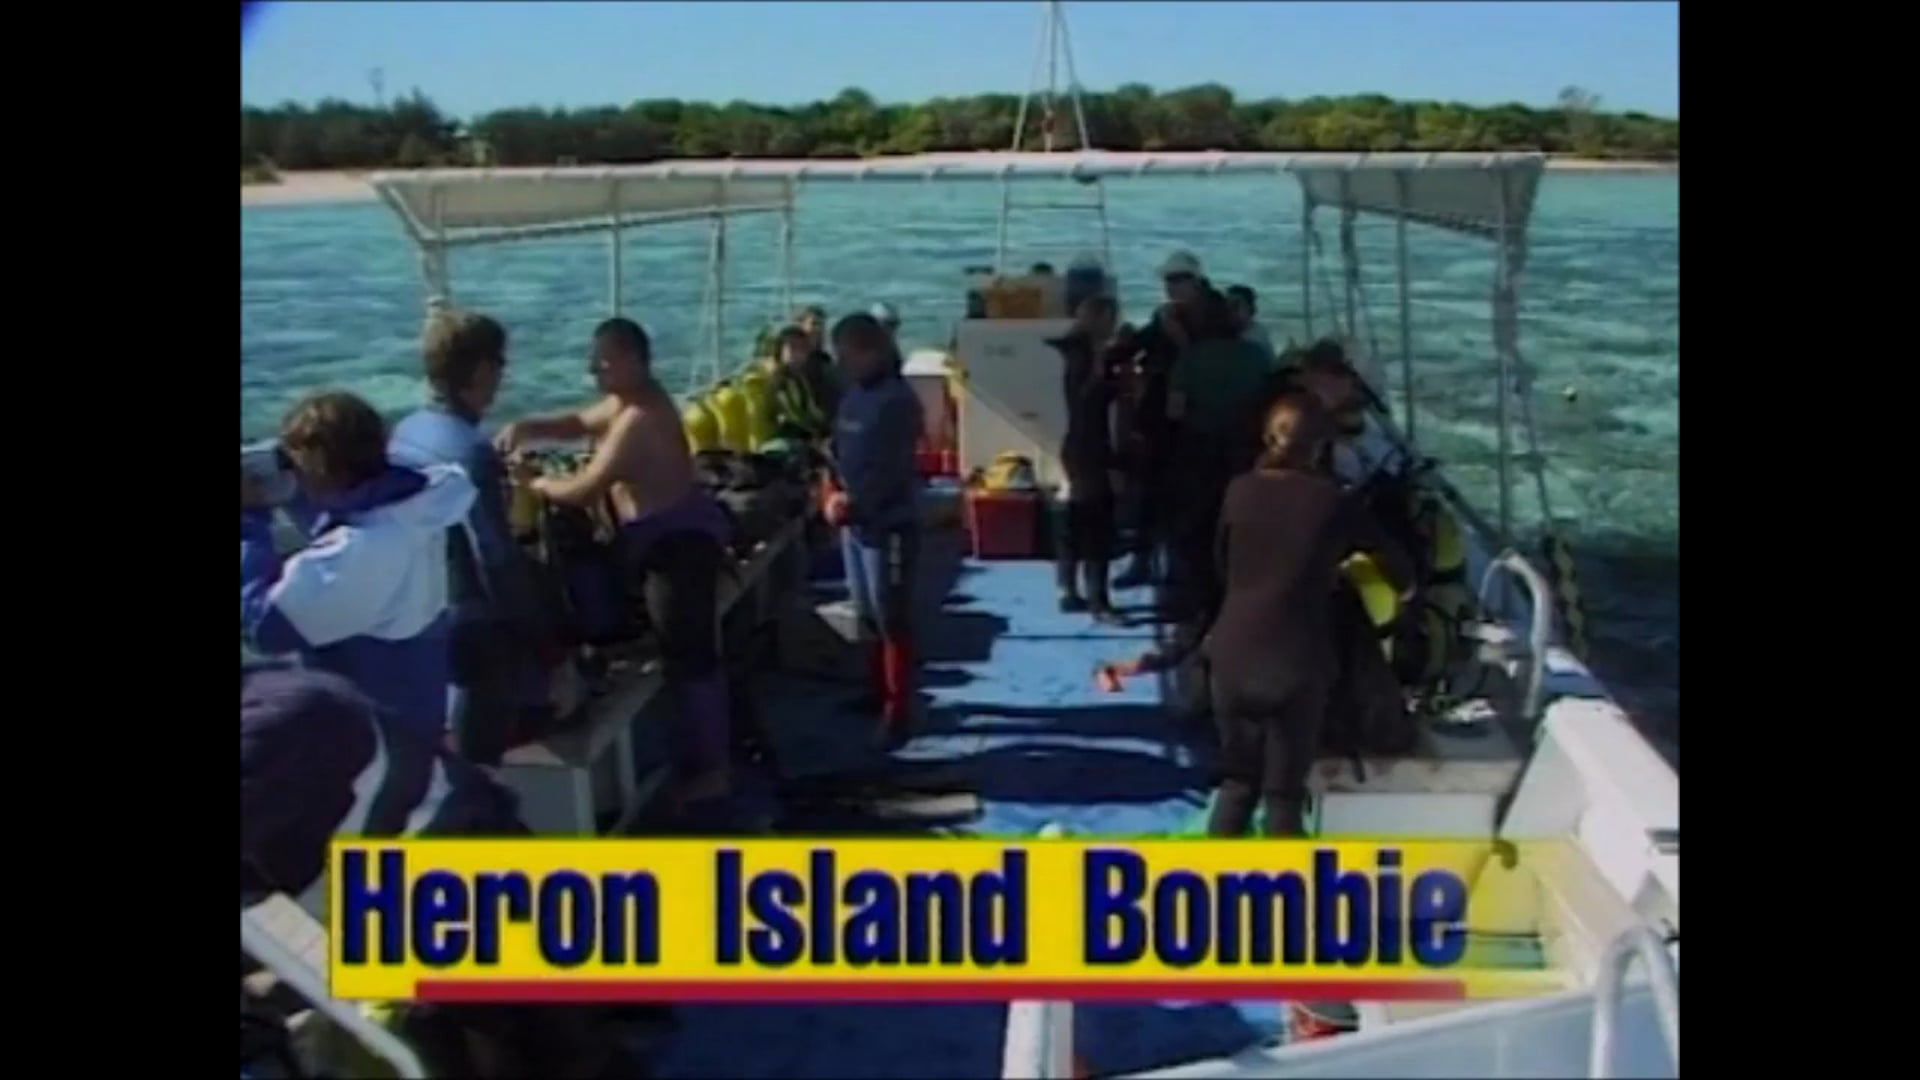 Heron Island Bombie – Clint Hempsall